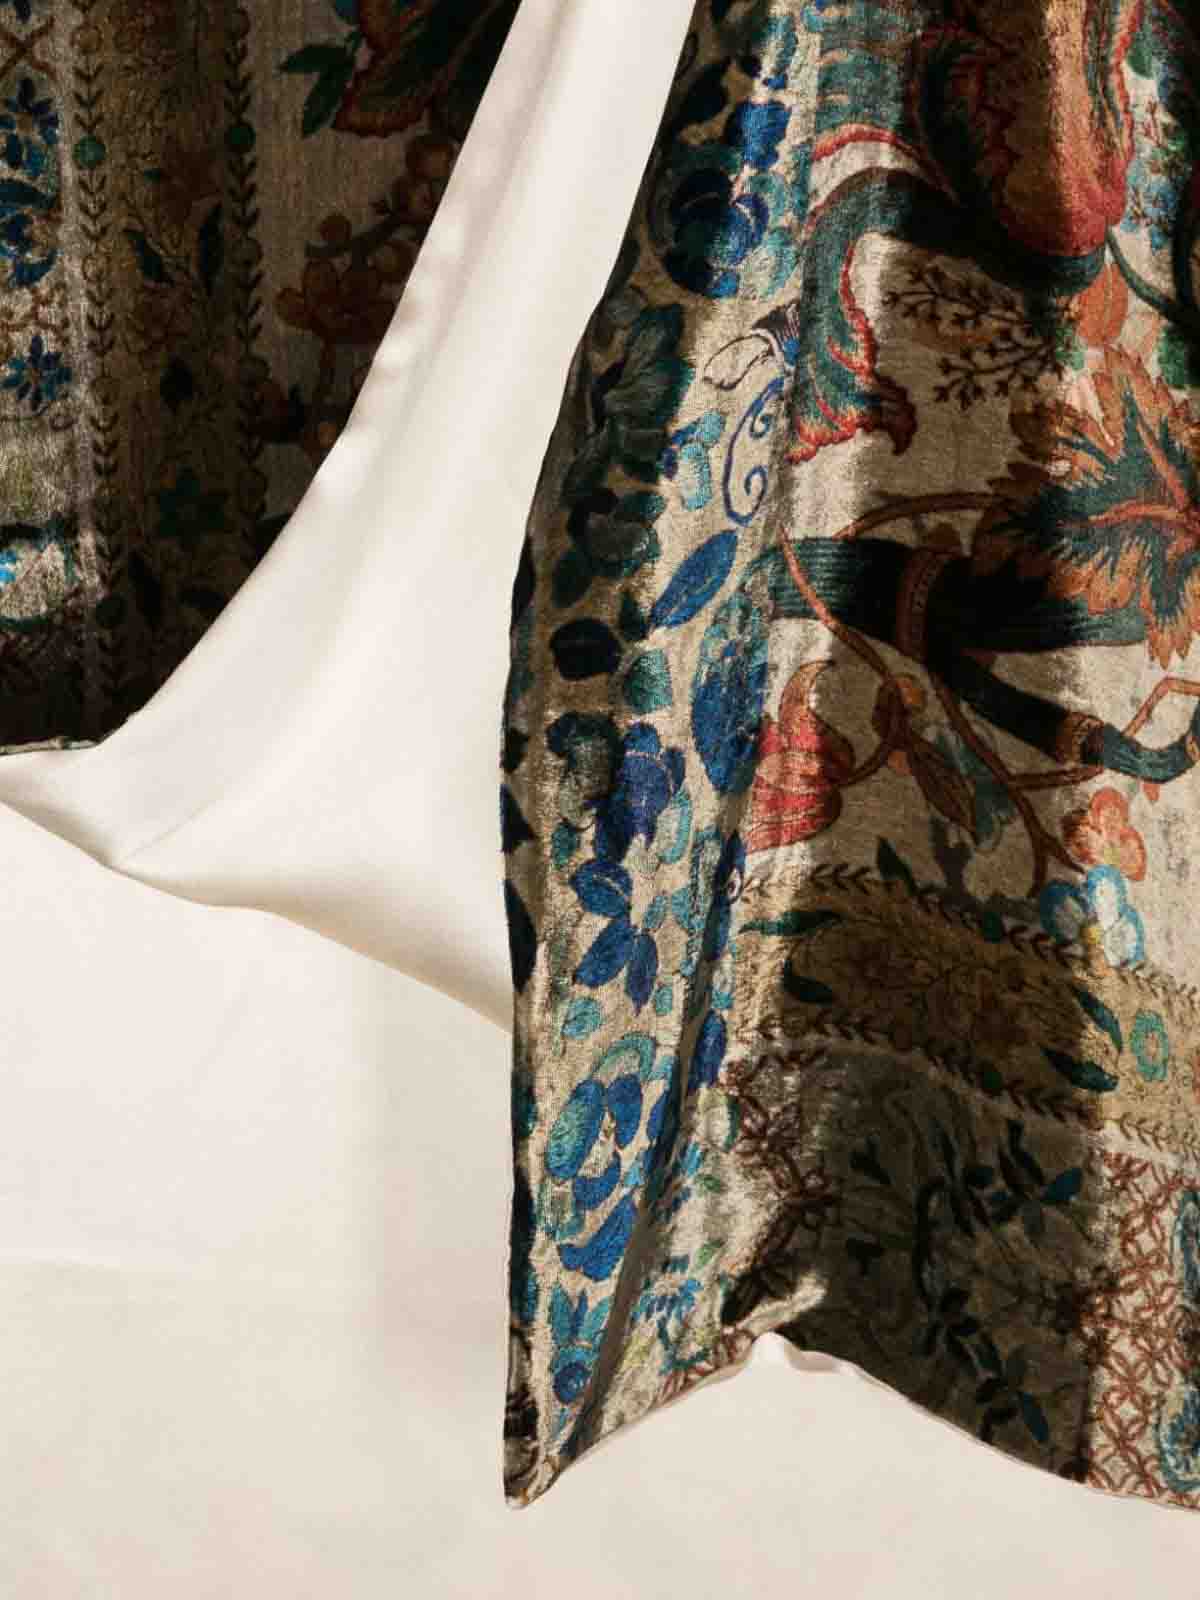 Scarves Pierre-Louis Mascia - Silk scarf - KANADAS065X200D093508825